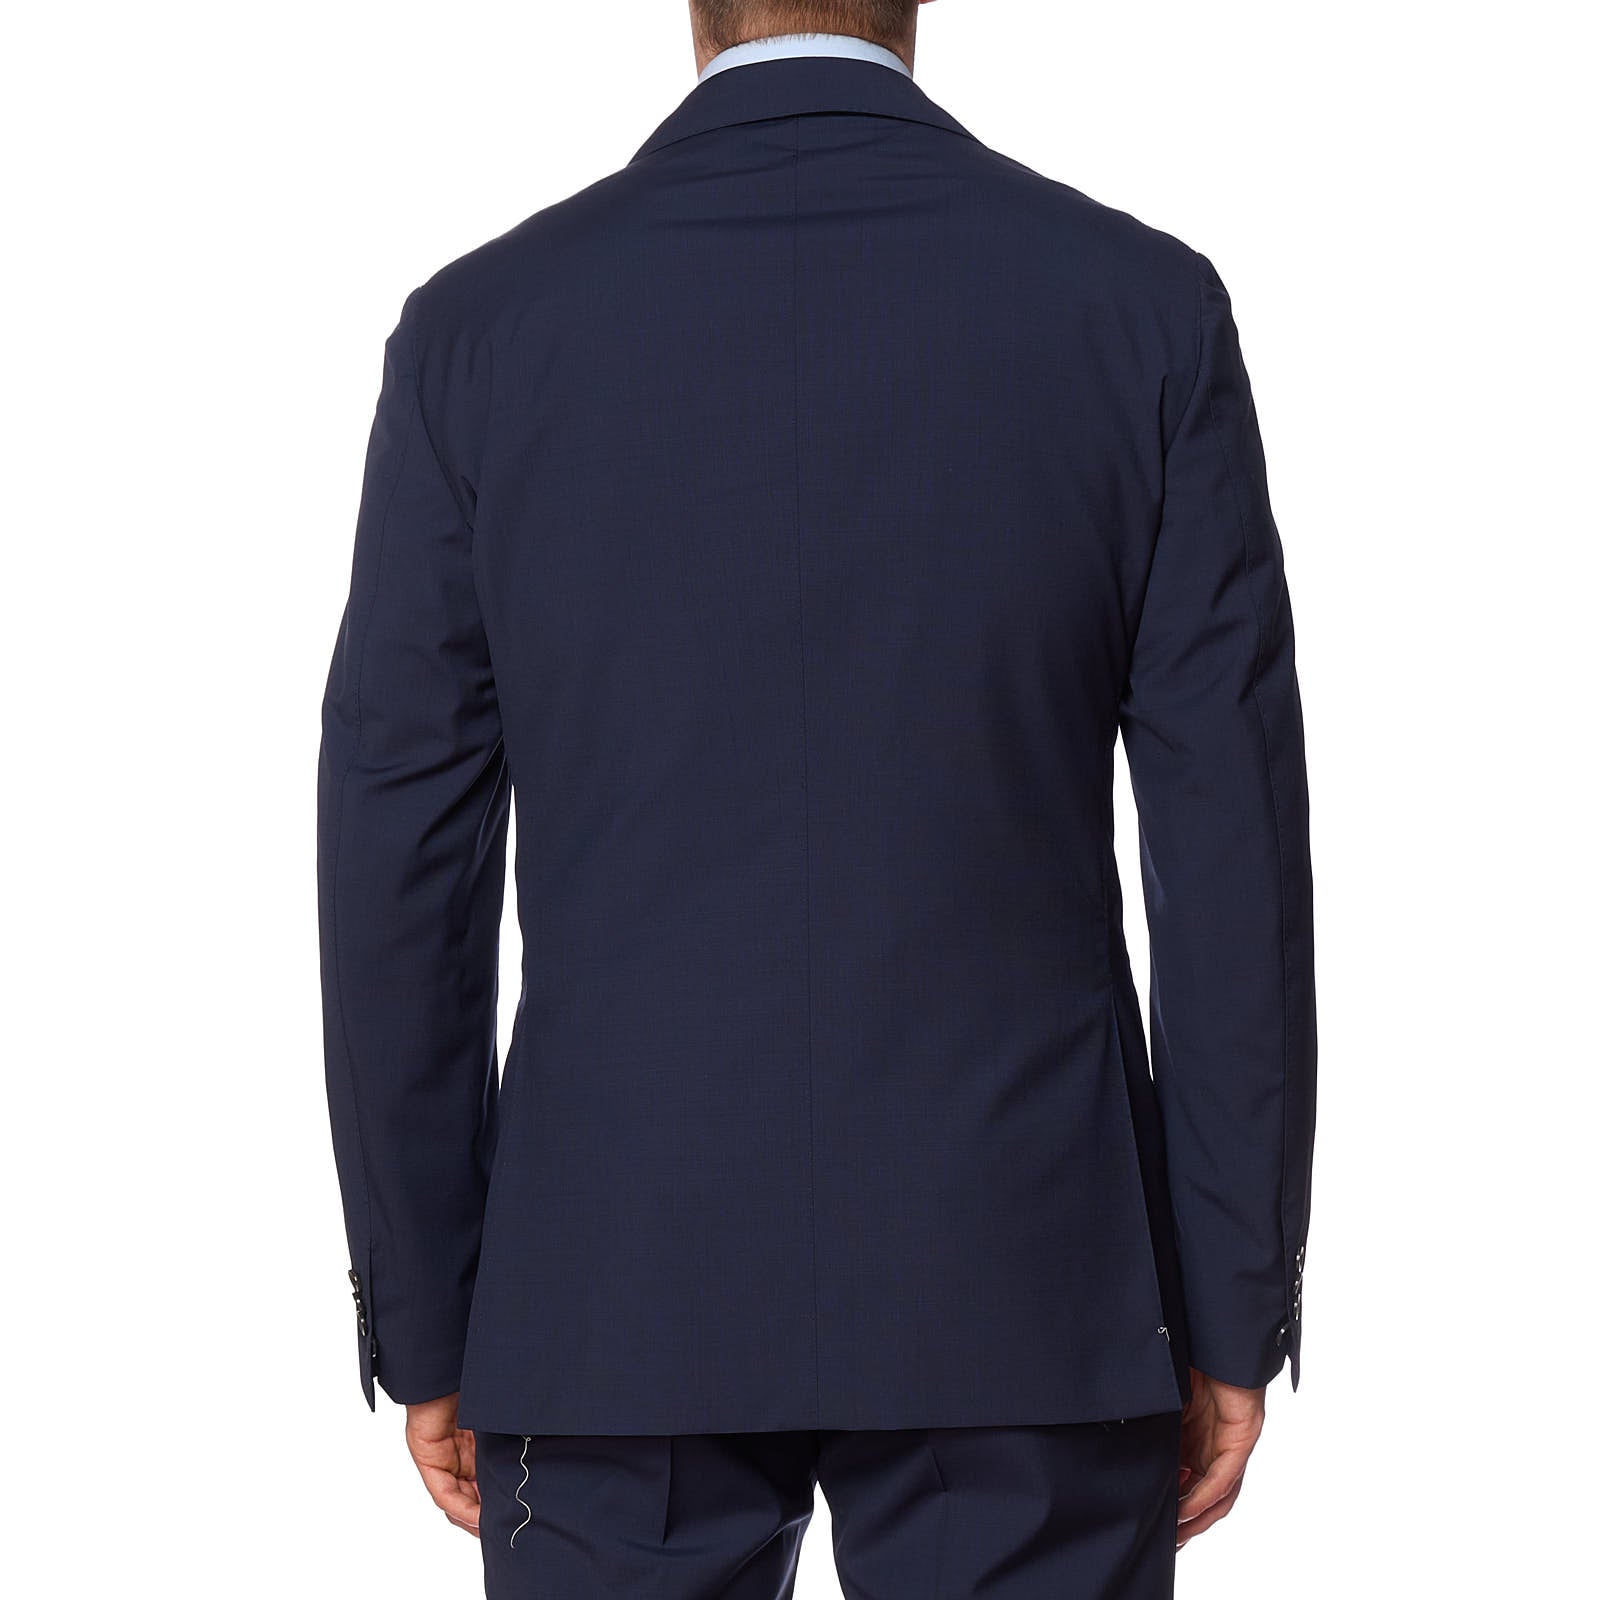 VANNUCCI Milano Navy Blue Virgin Wool Super 130's Suit EU 54 NEW US 42